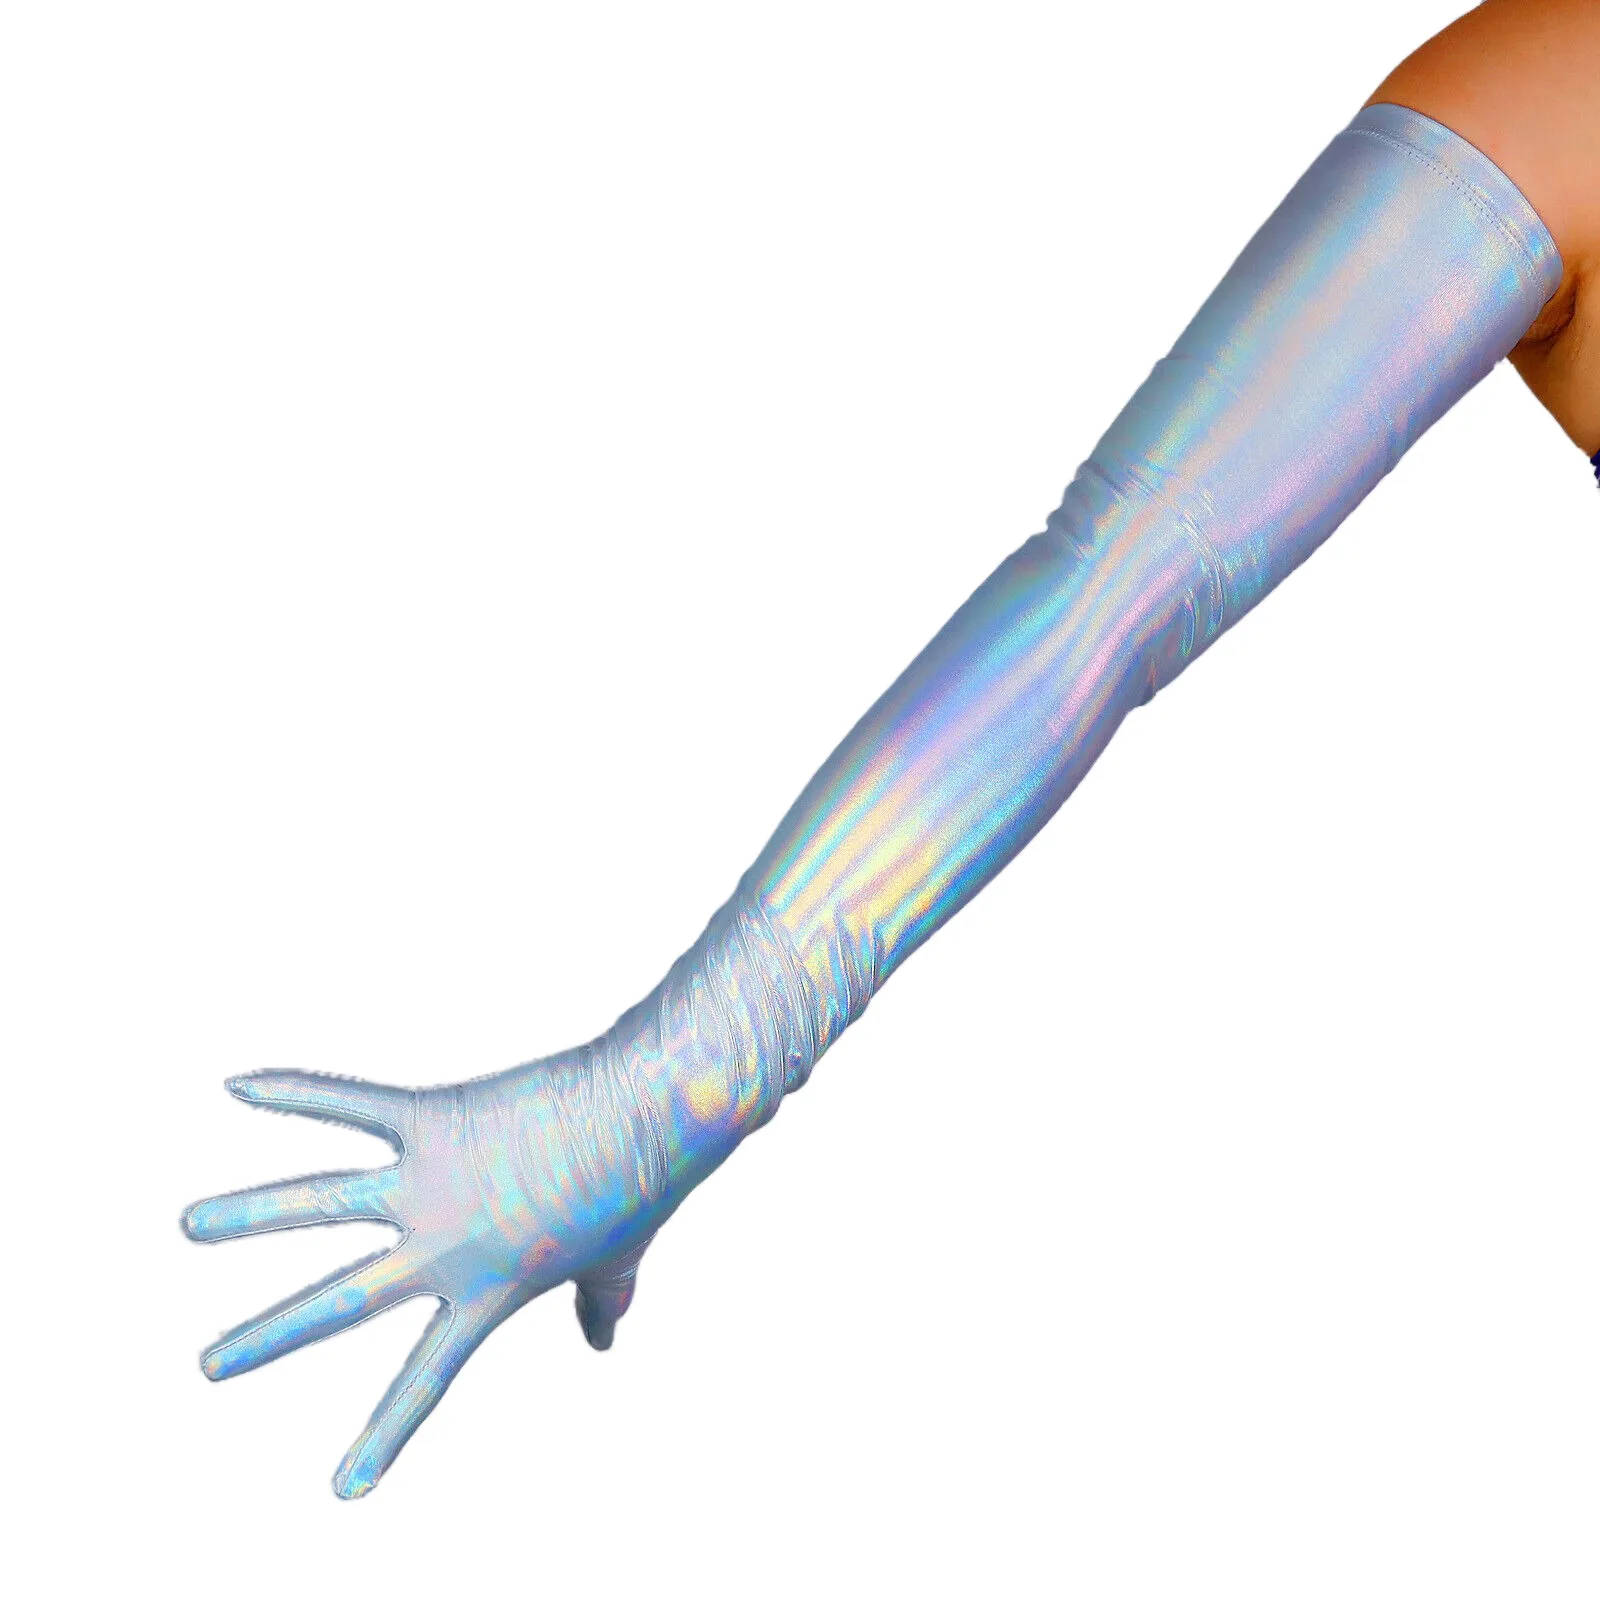 

DooWay Women's Fashion Metallic Rainbow Gloves Holographic Shine Stretch Super Long Evening Halloween Costume Party Opera Glove